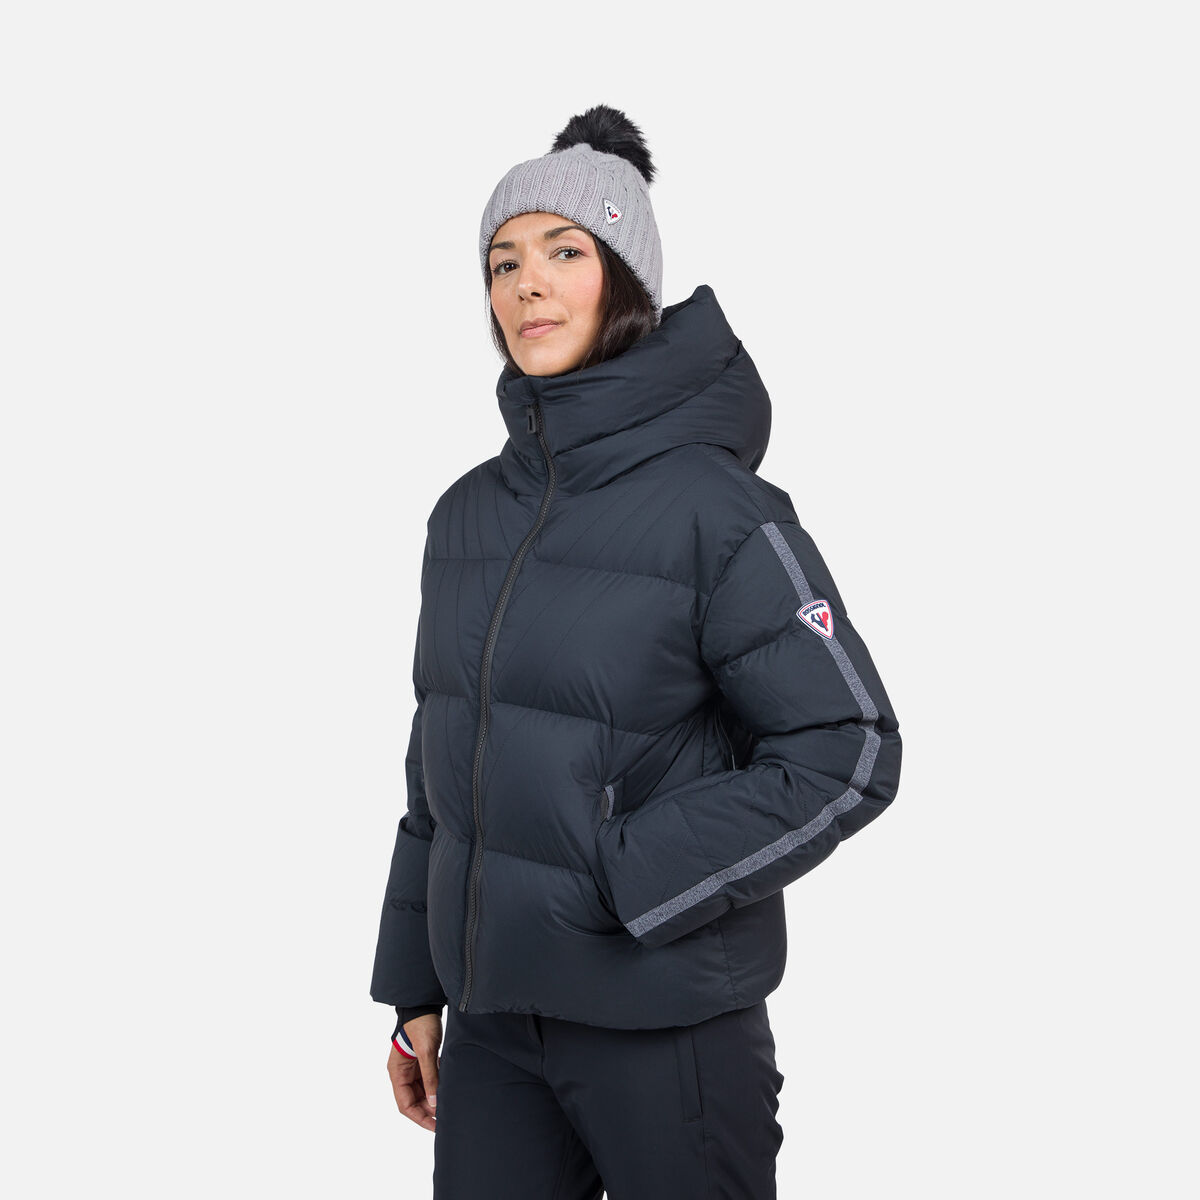 RONGbbppQ Womens Short down Jacket Clothing Skiing Outdoor